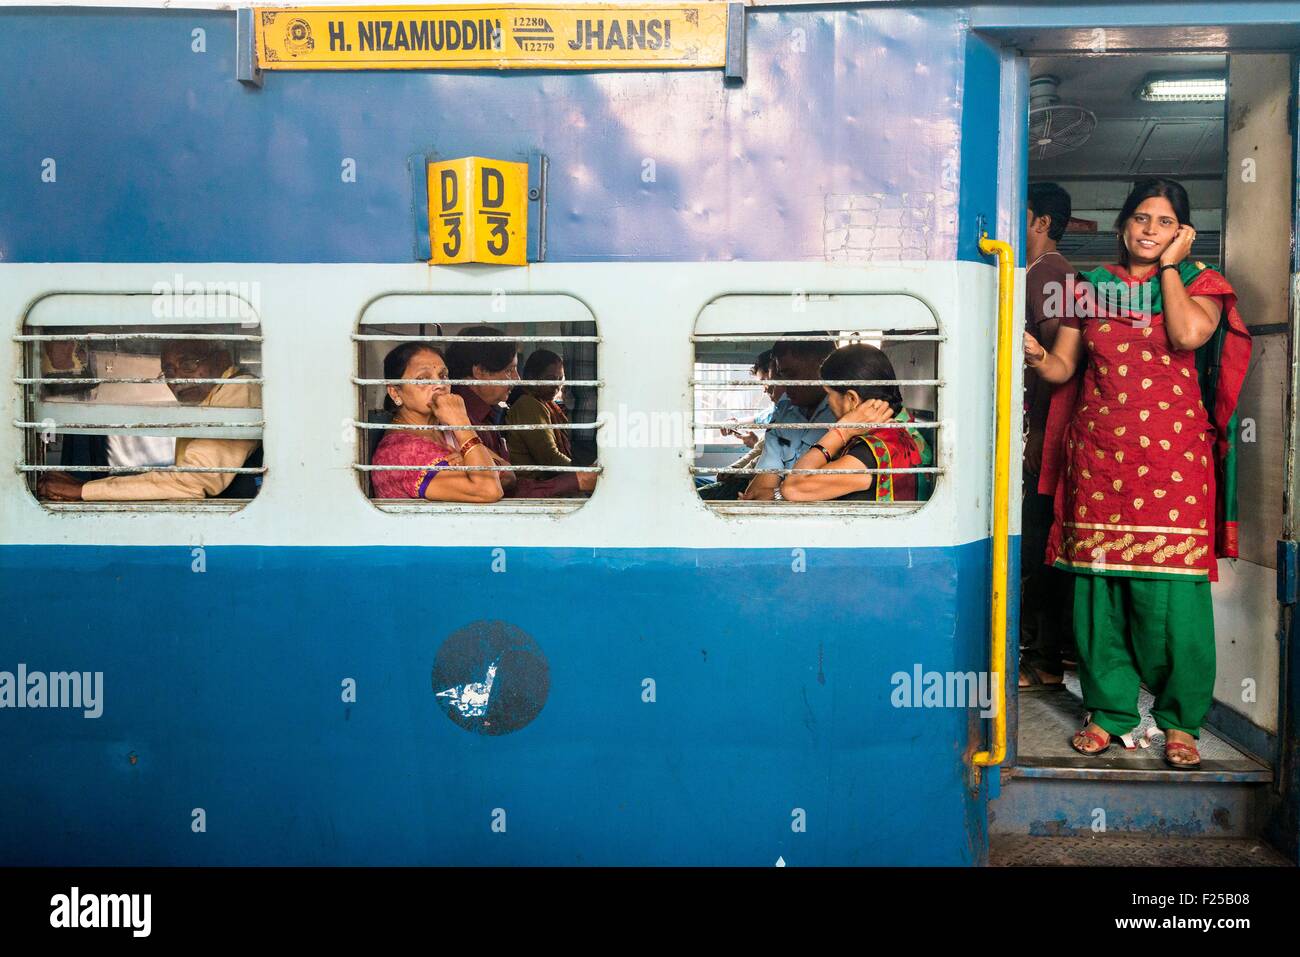 India, Uttar Pradesh state, Agra, the train station Stock Photo